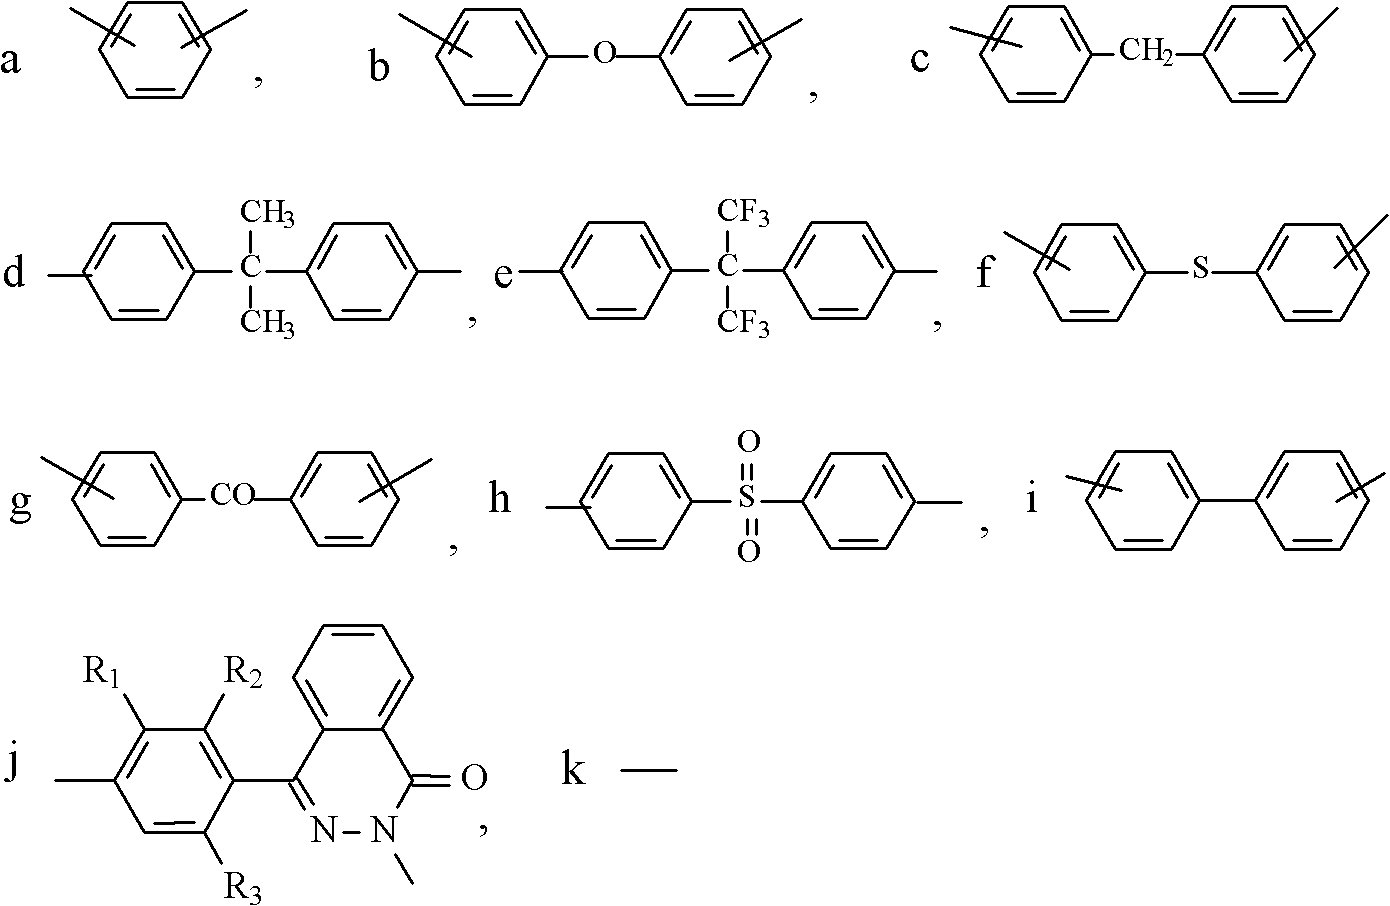 Crosslinked heterocyclic polyarylether alkaline electrolyte membrane and preparation method thereof